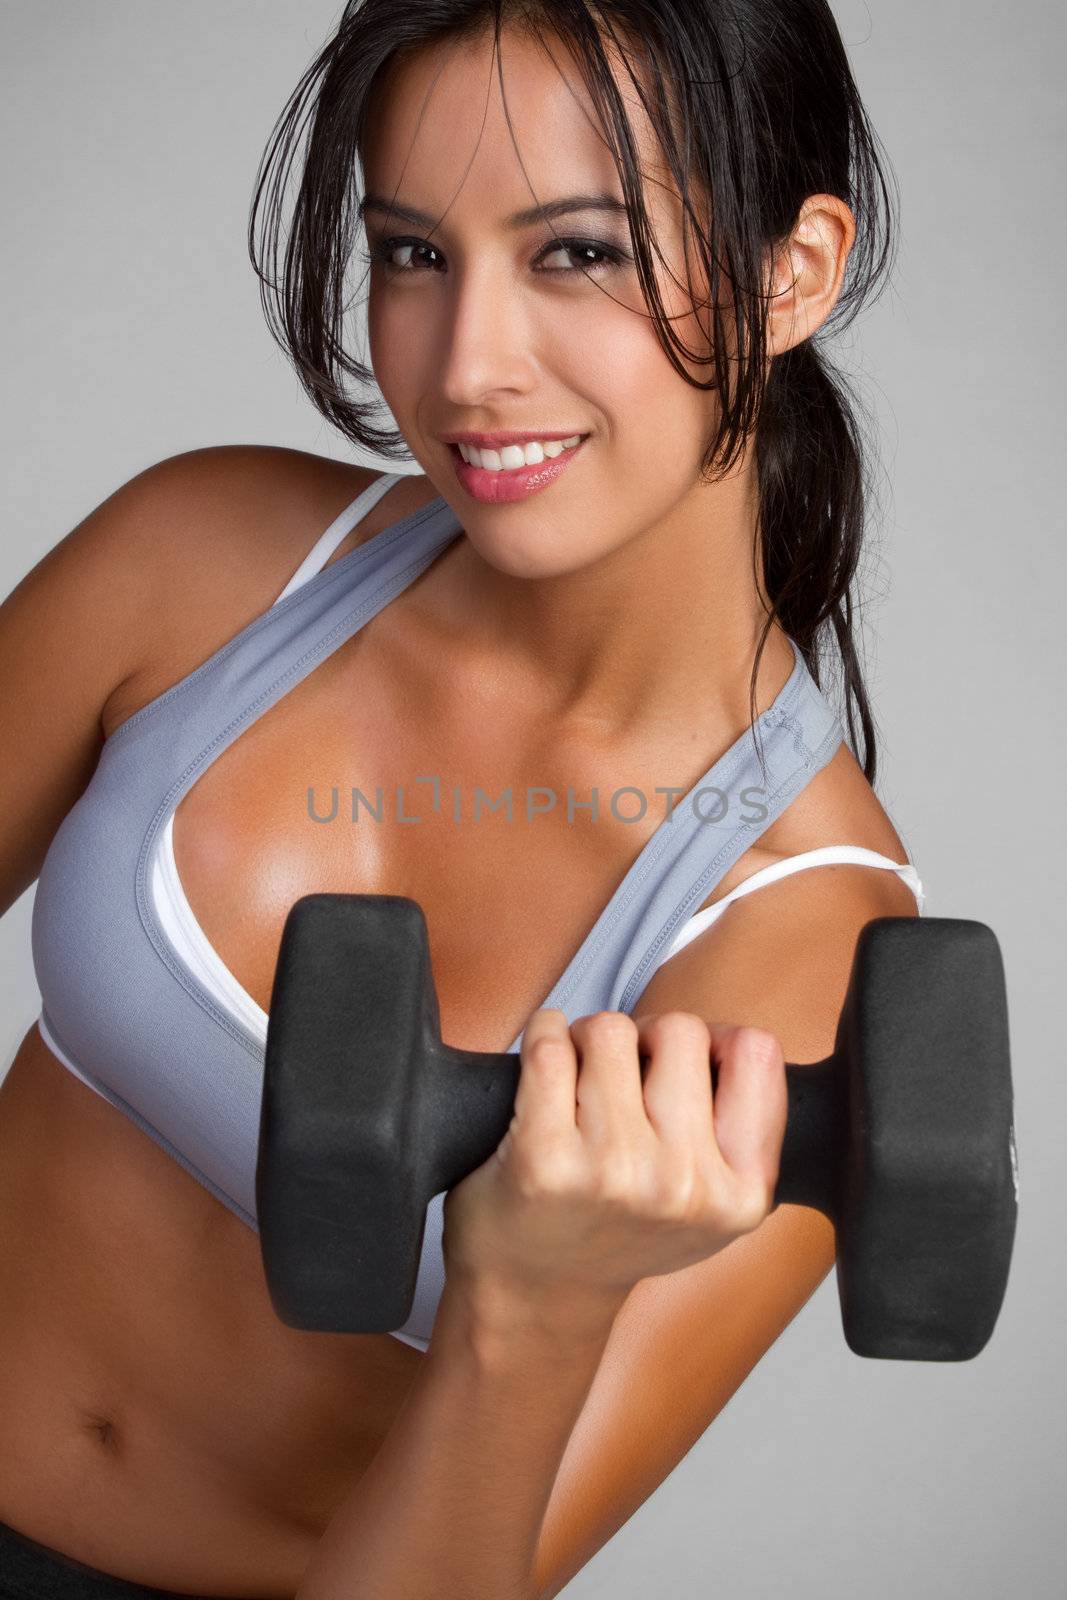 Beautiful smiling latina fitness woman